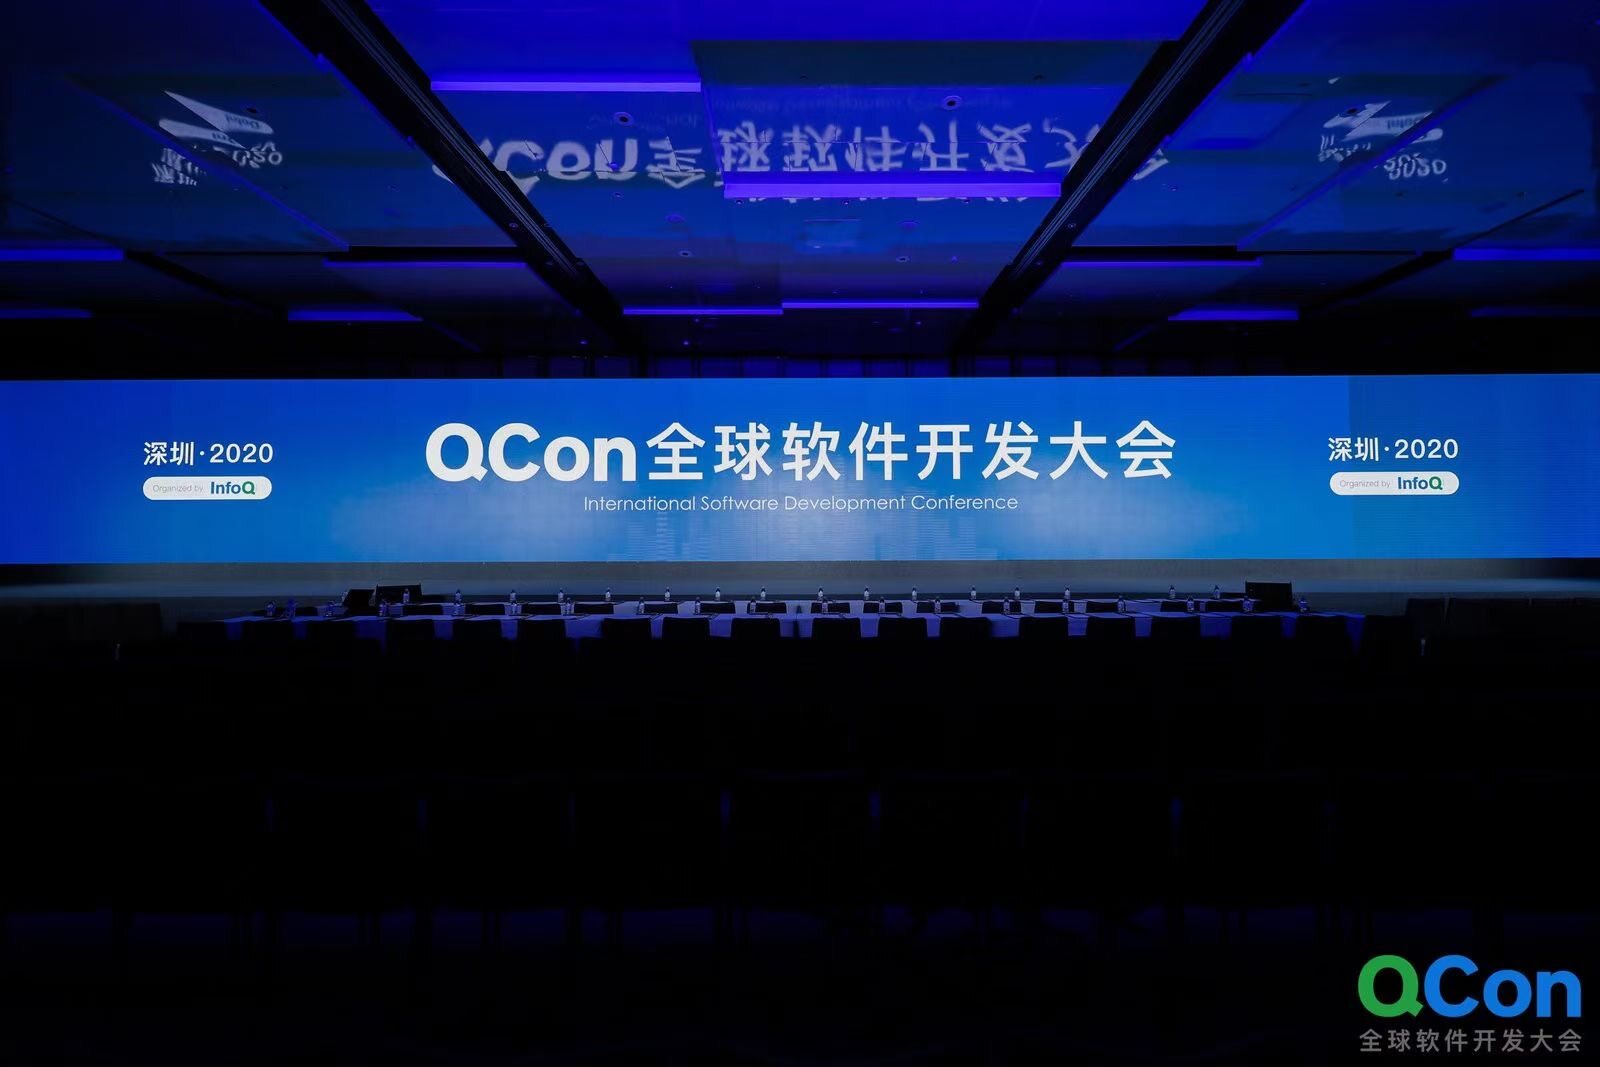 QCon 再开张，今天是深圳站开幕